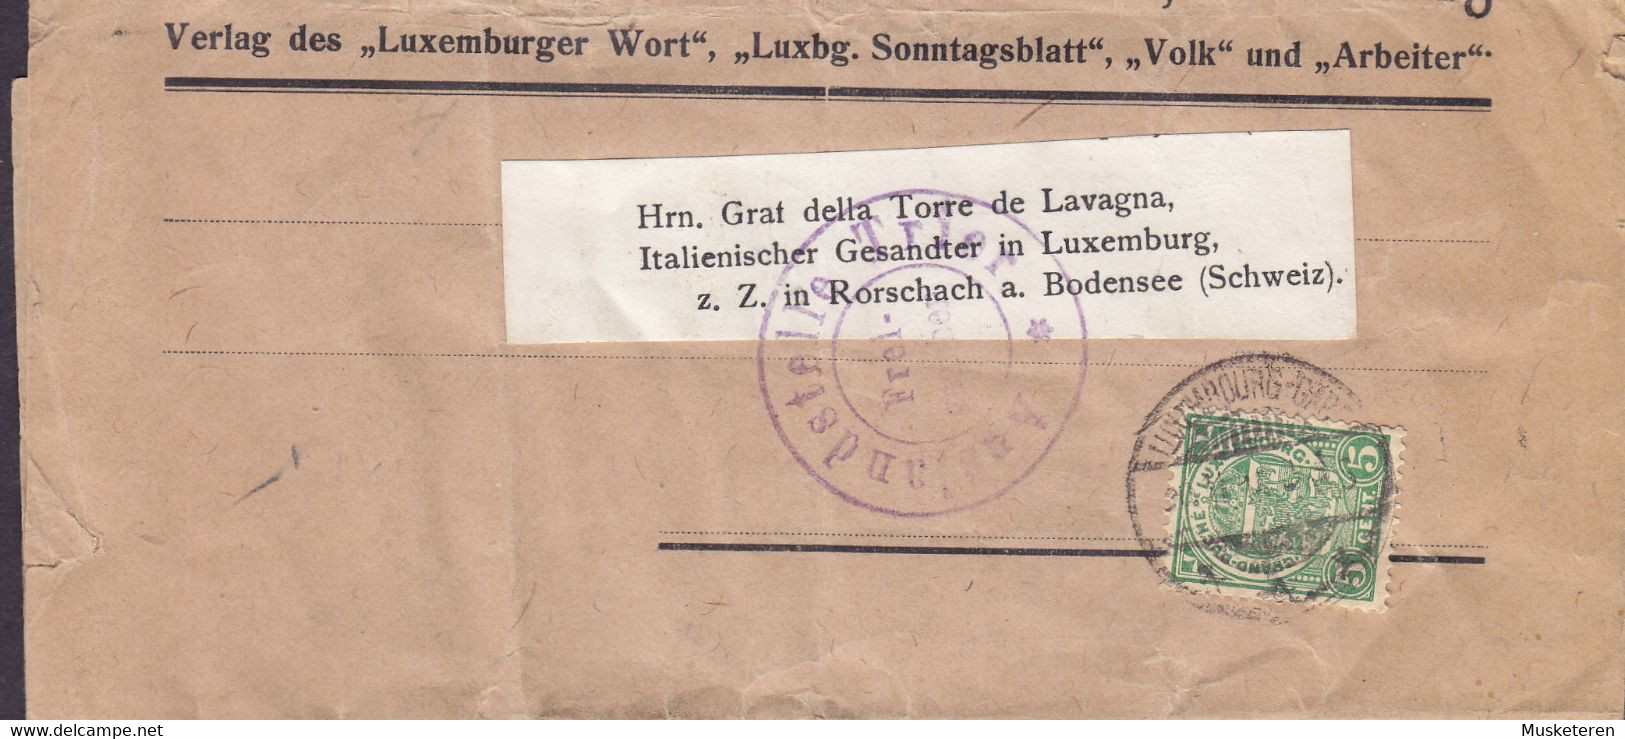 Luxembourg DRUCKEREI ST. PAULUS Wrapper Streifband Bande Journal LUXEMBOURG-GARE 1915 RORSCHACH Suisse CENSOR - 1907-24 Ecusson